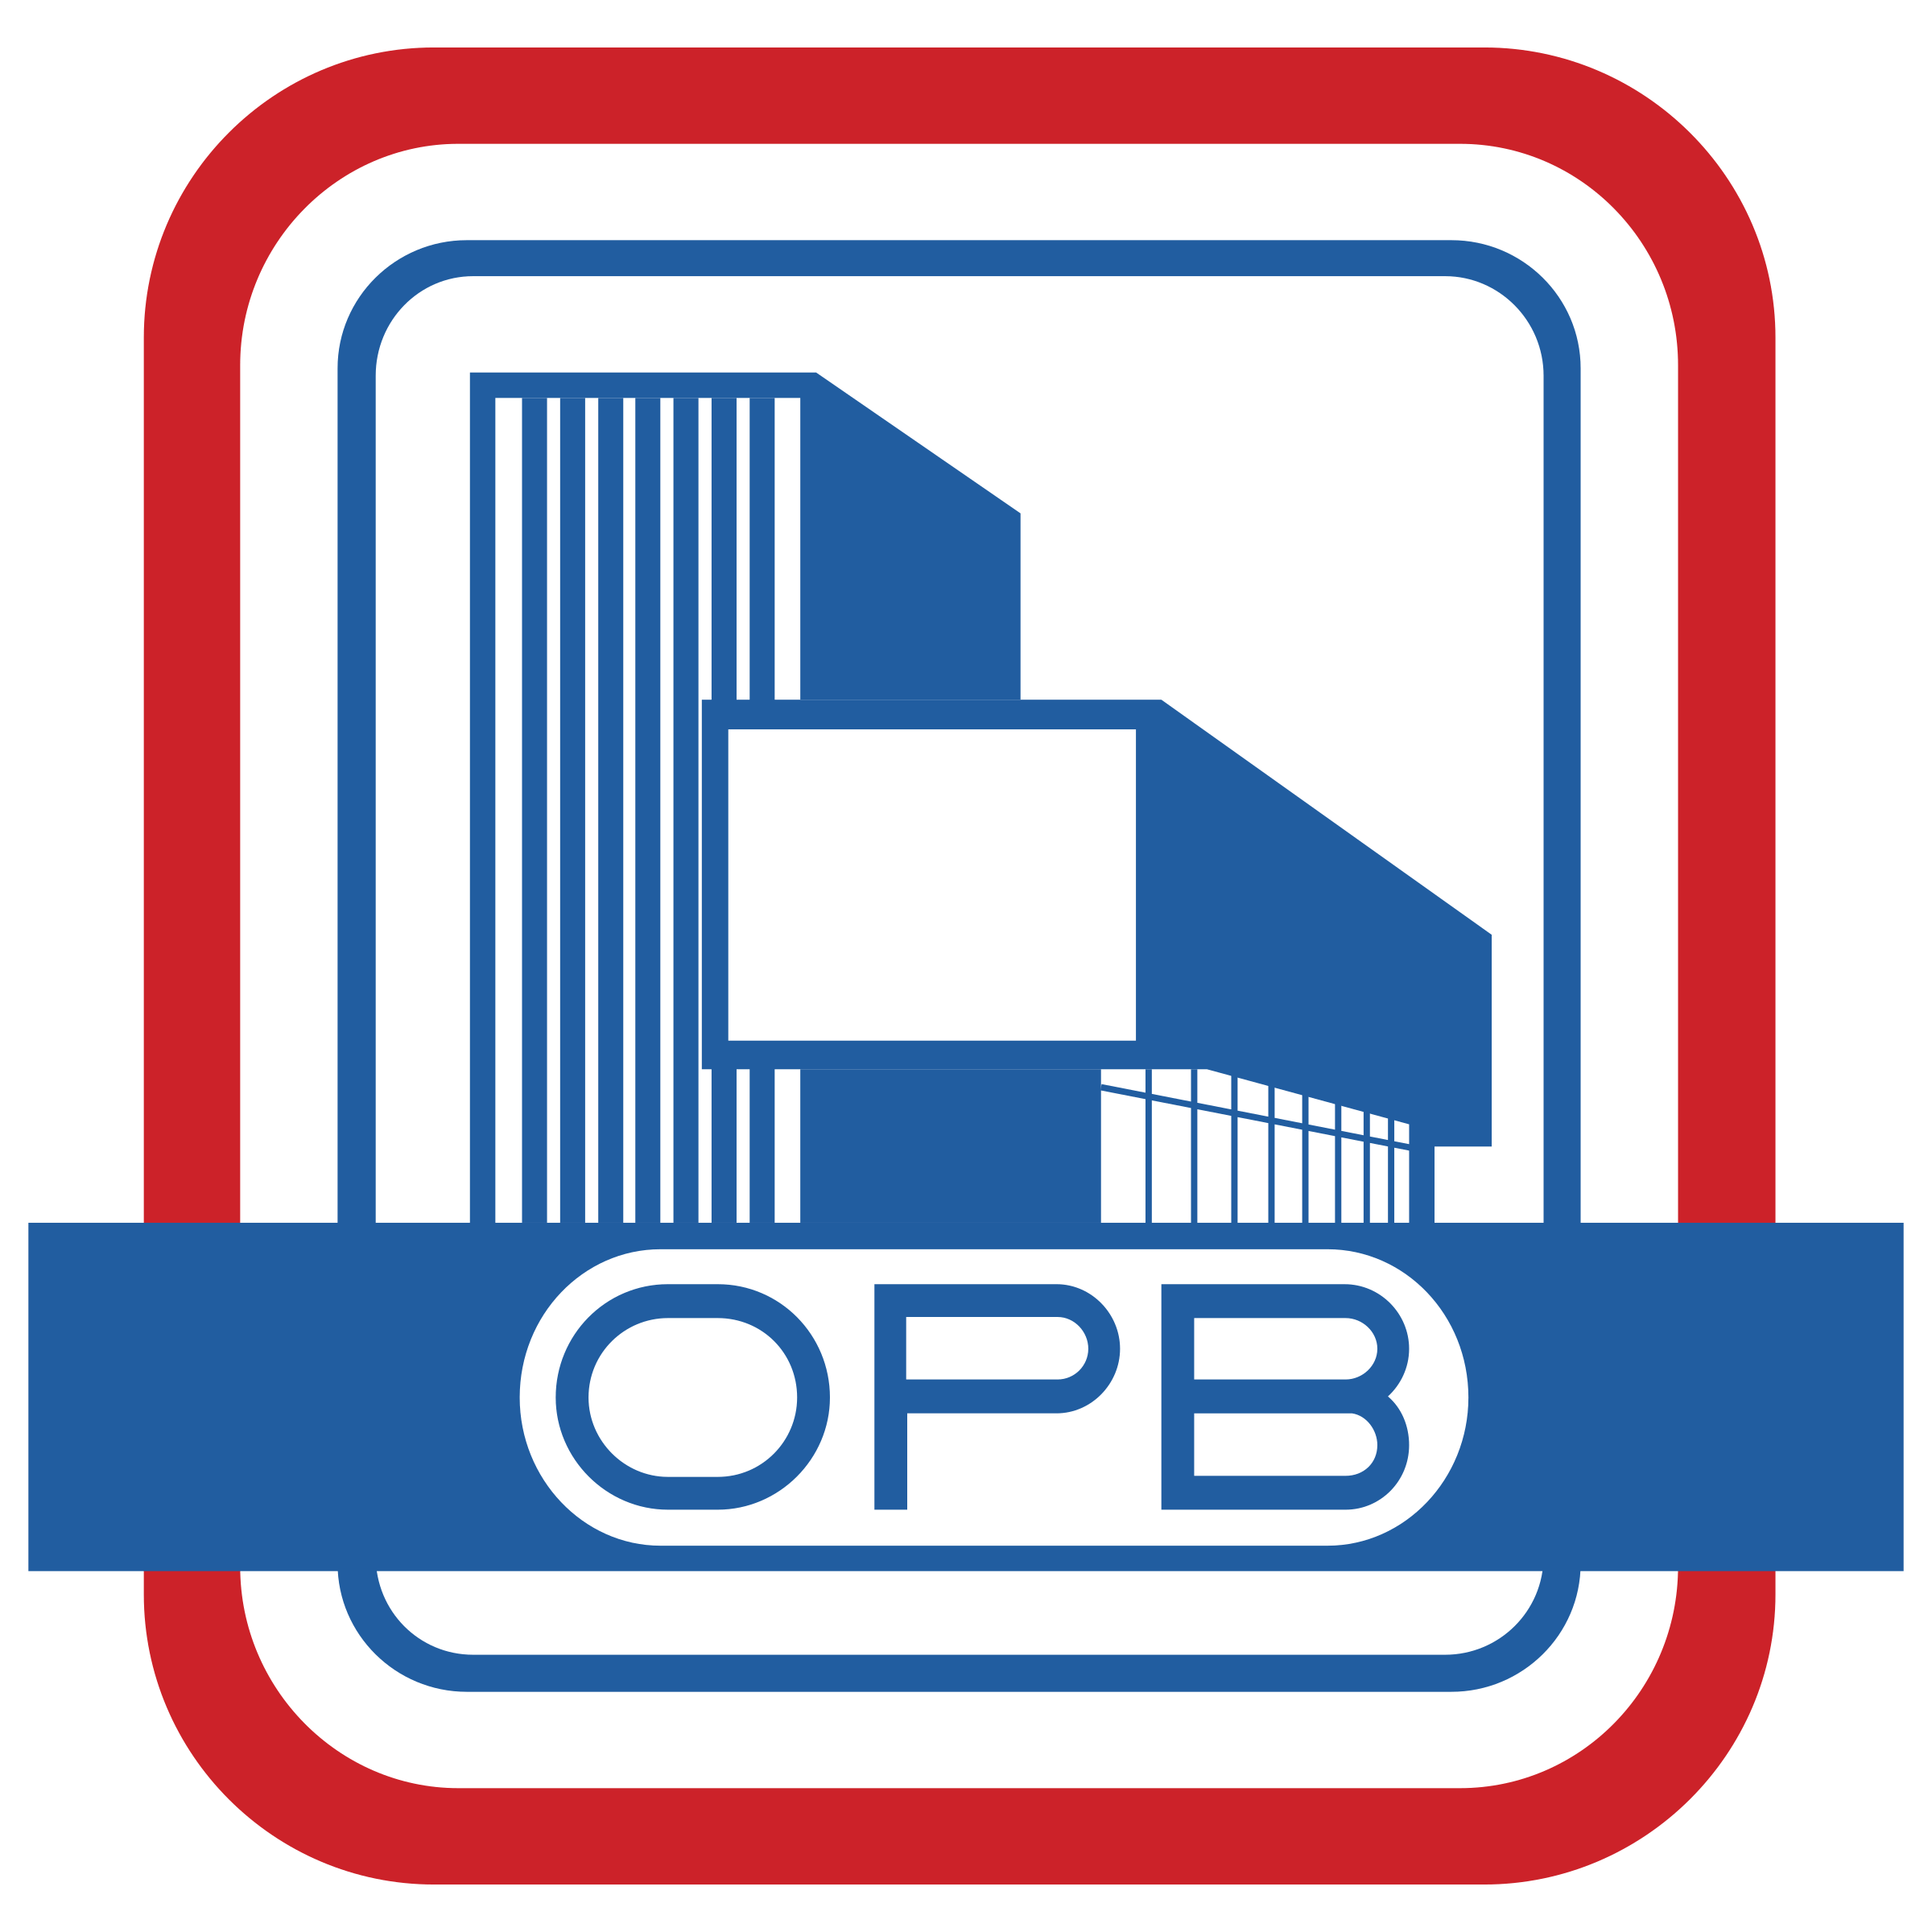 KOPB Logo - OPB Logo PNG Transparent & SVG Vector - Freebie Supply